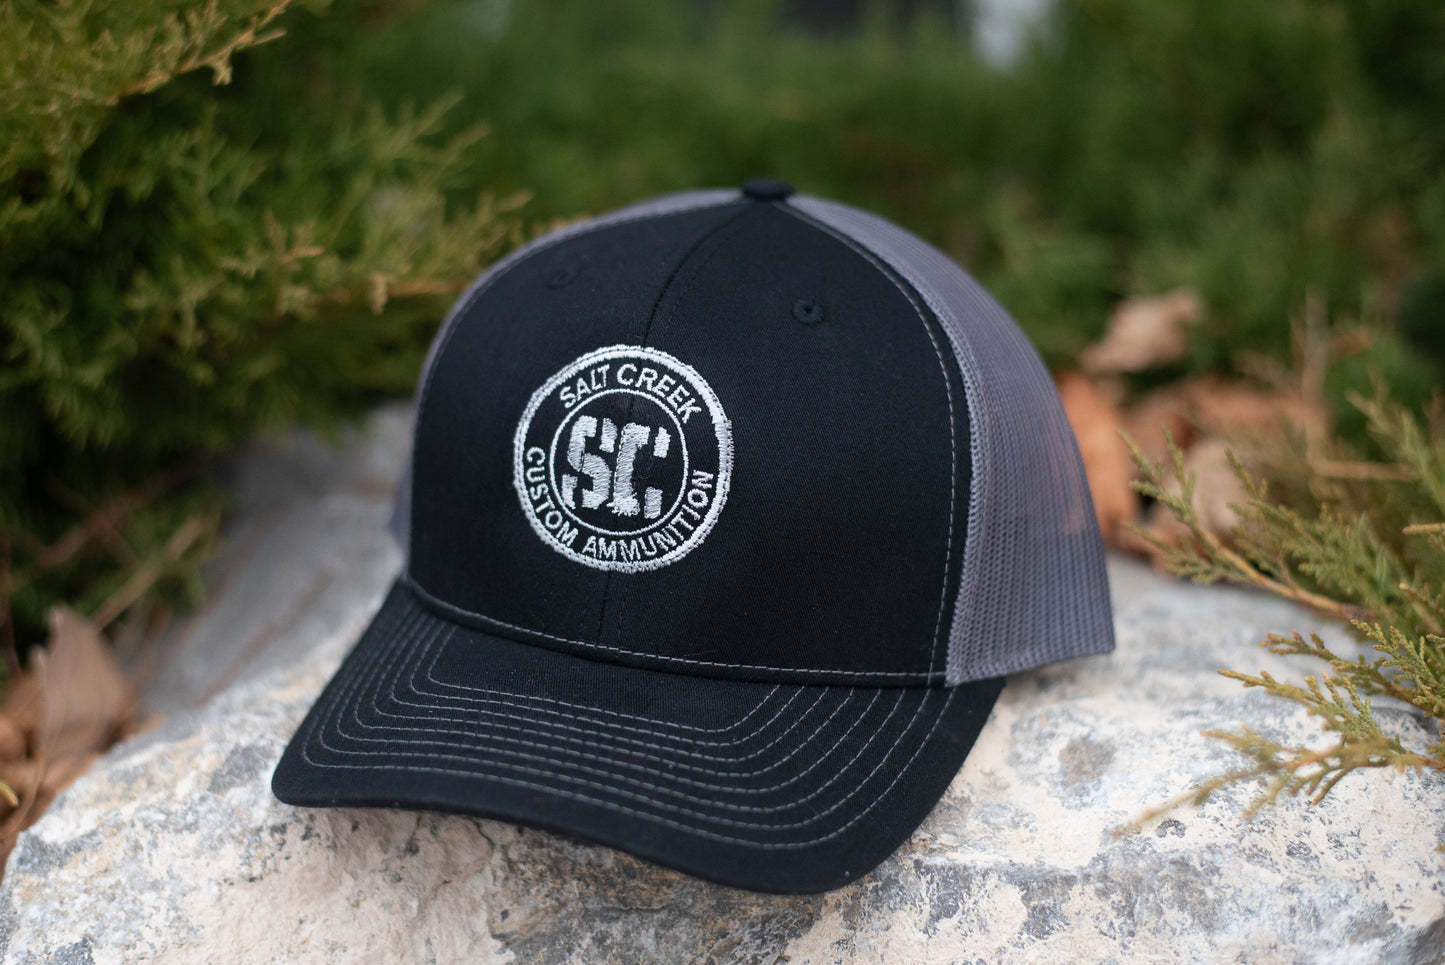 Black/Grey Embroidered Salt Creek Ammo Logo Hat